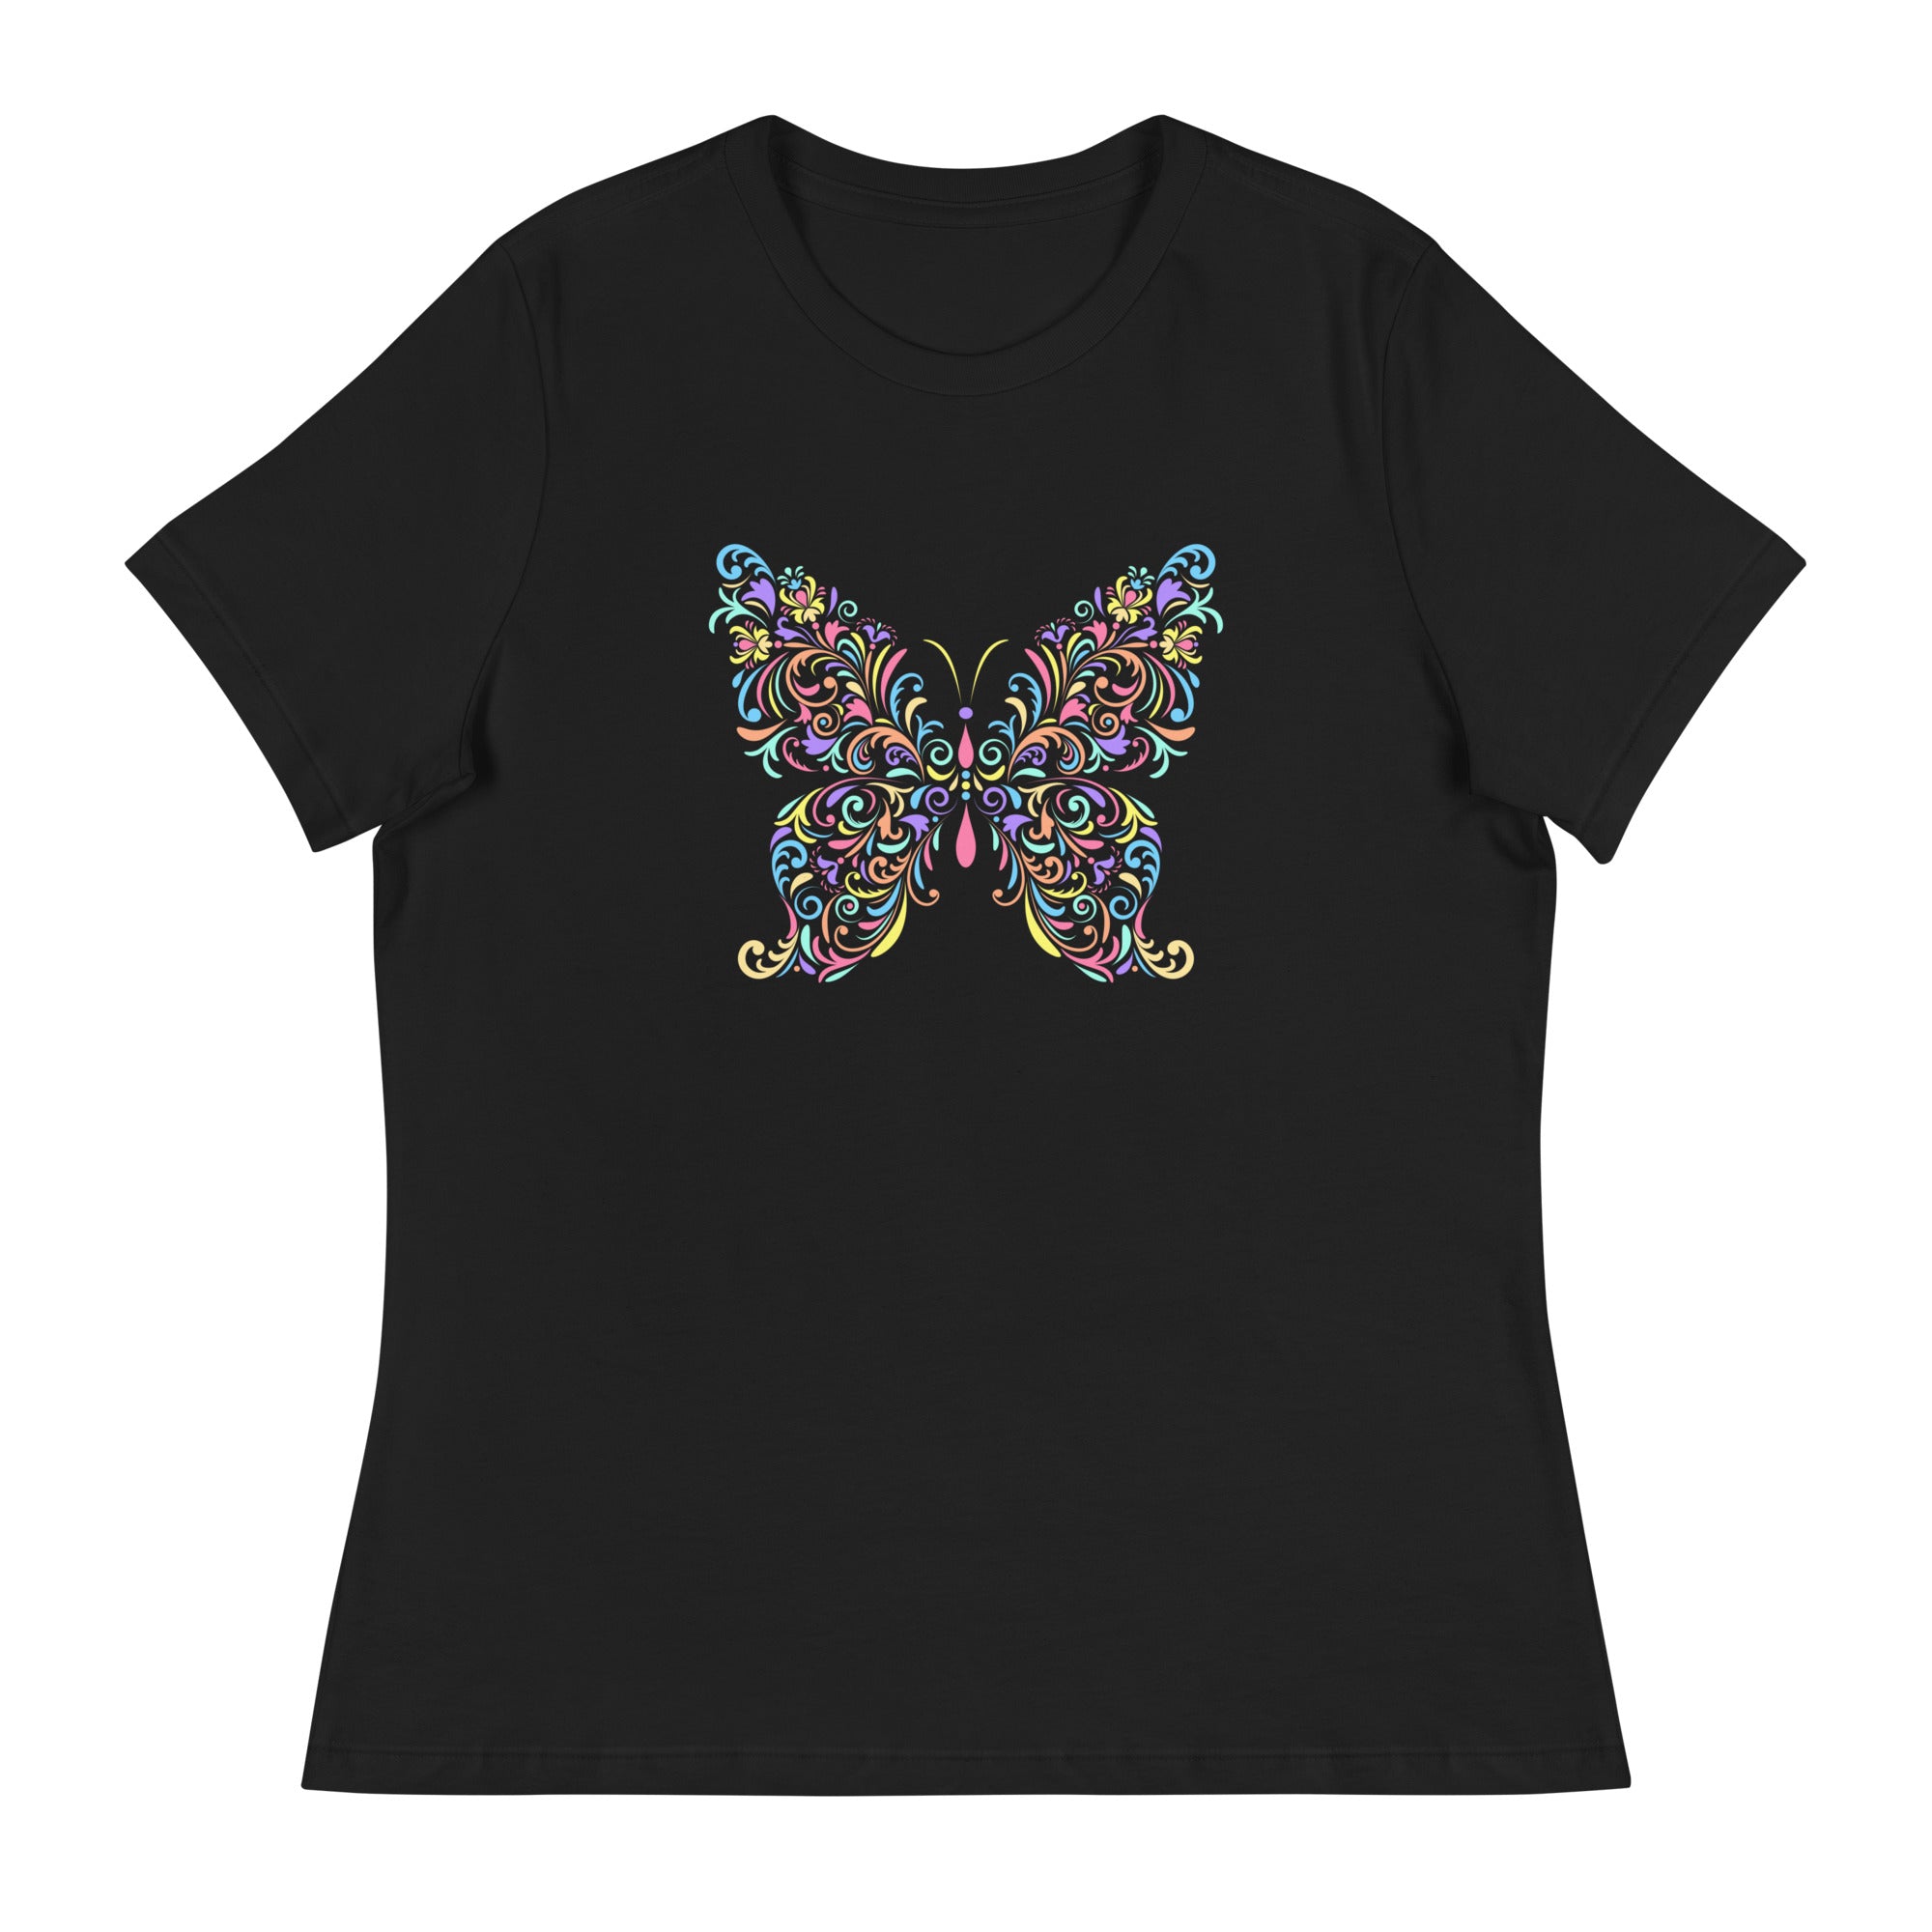 Butterfly Paisley Women's Tee